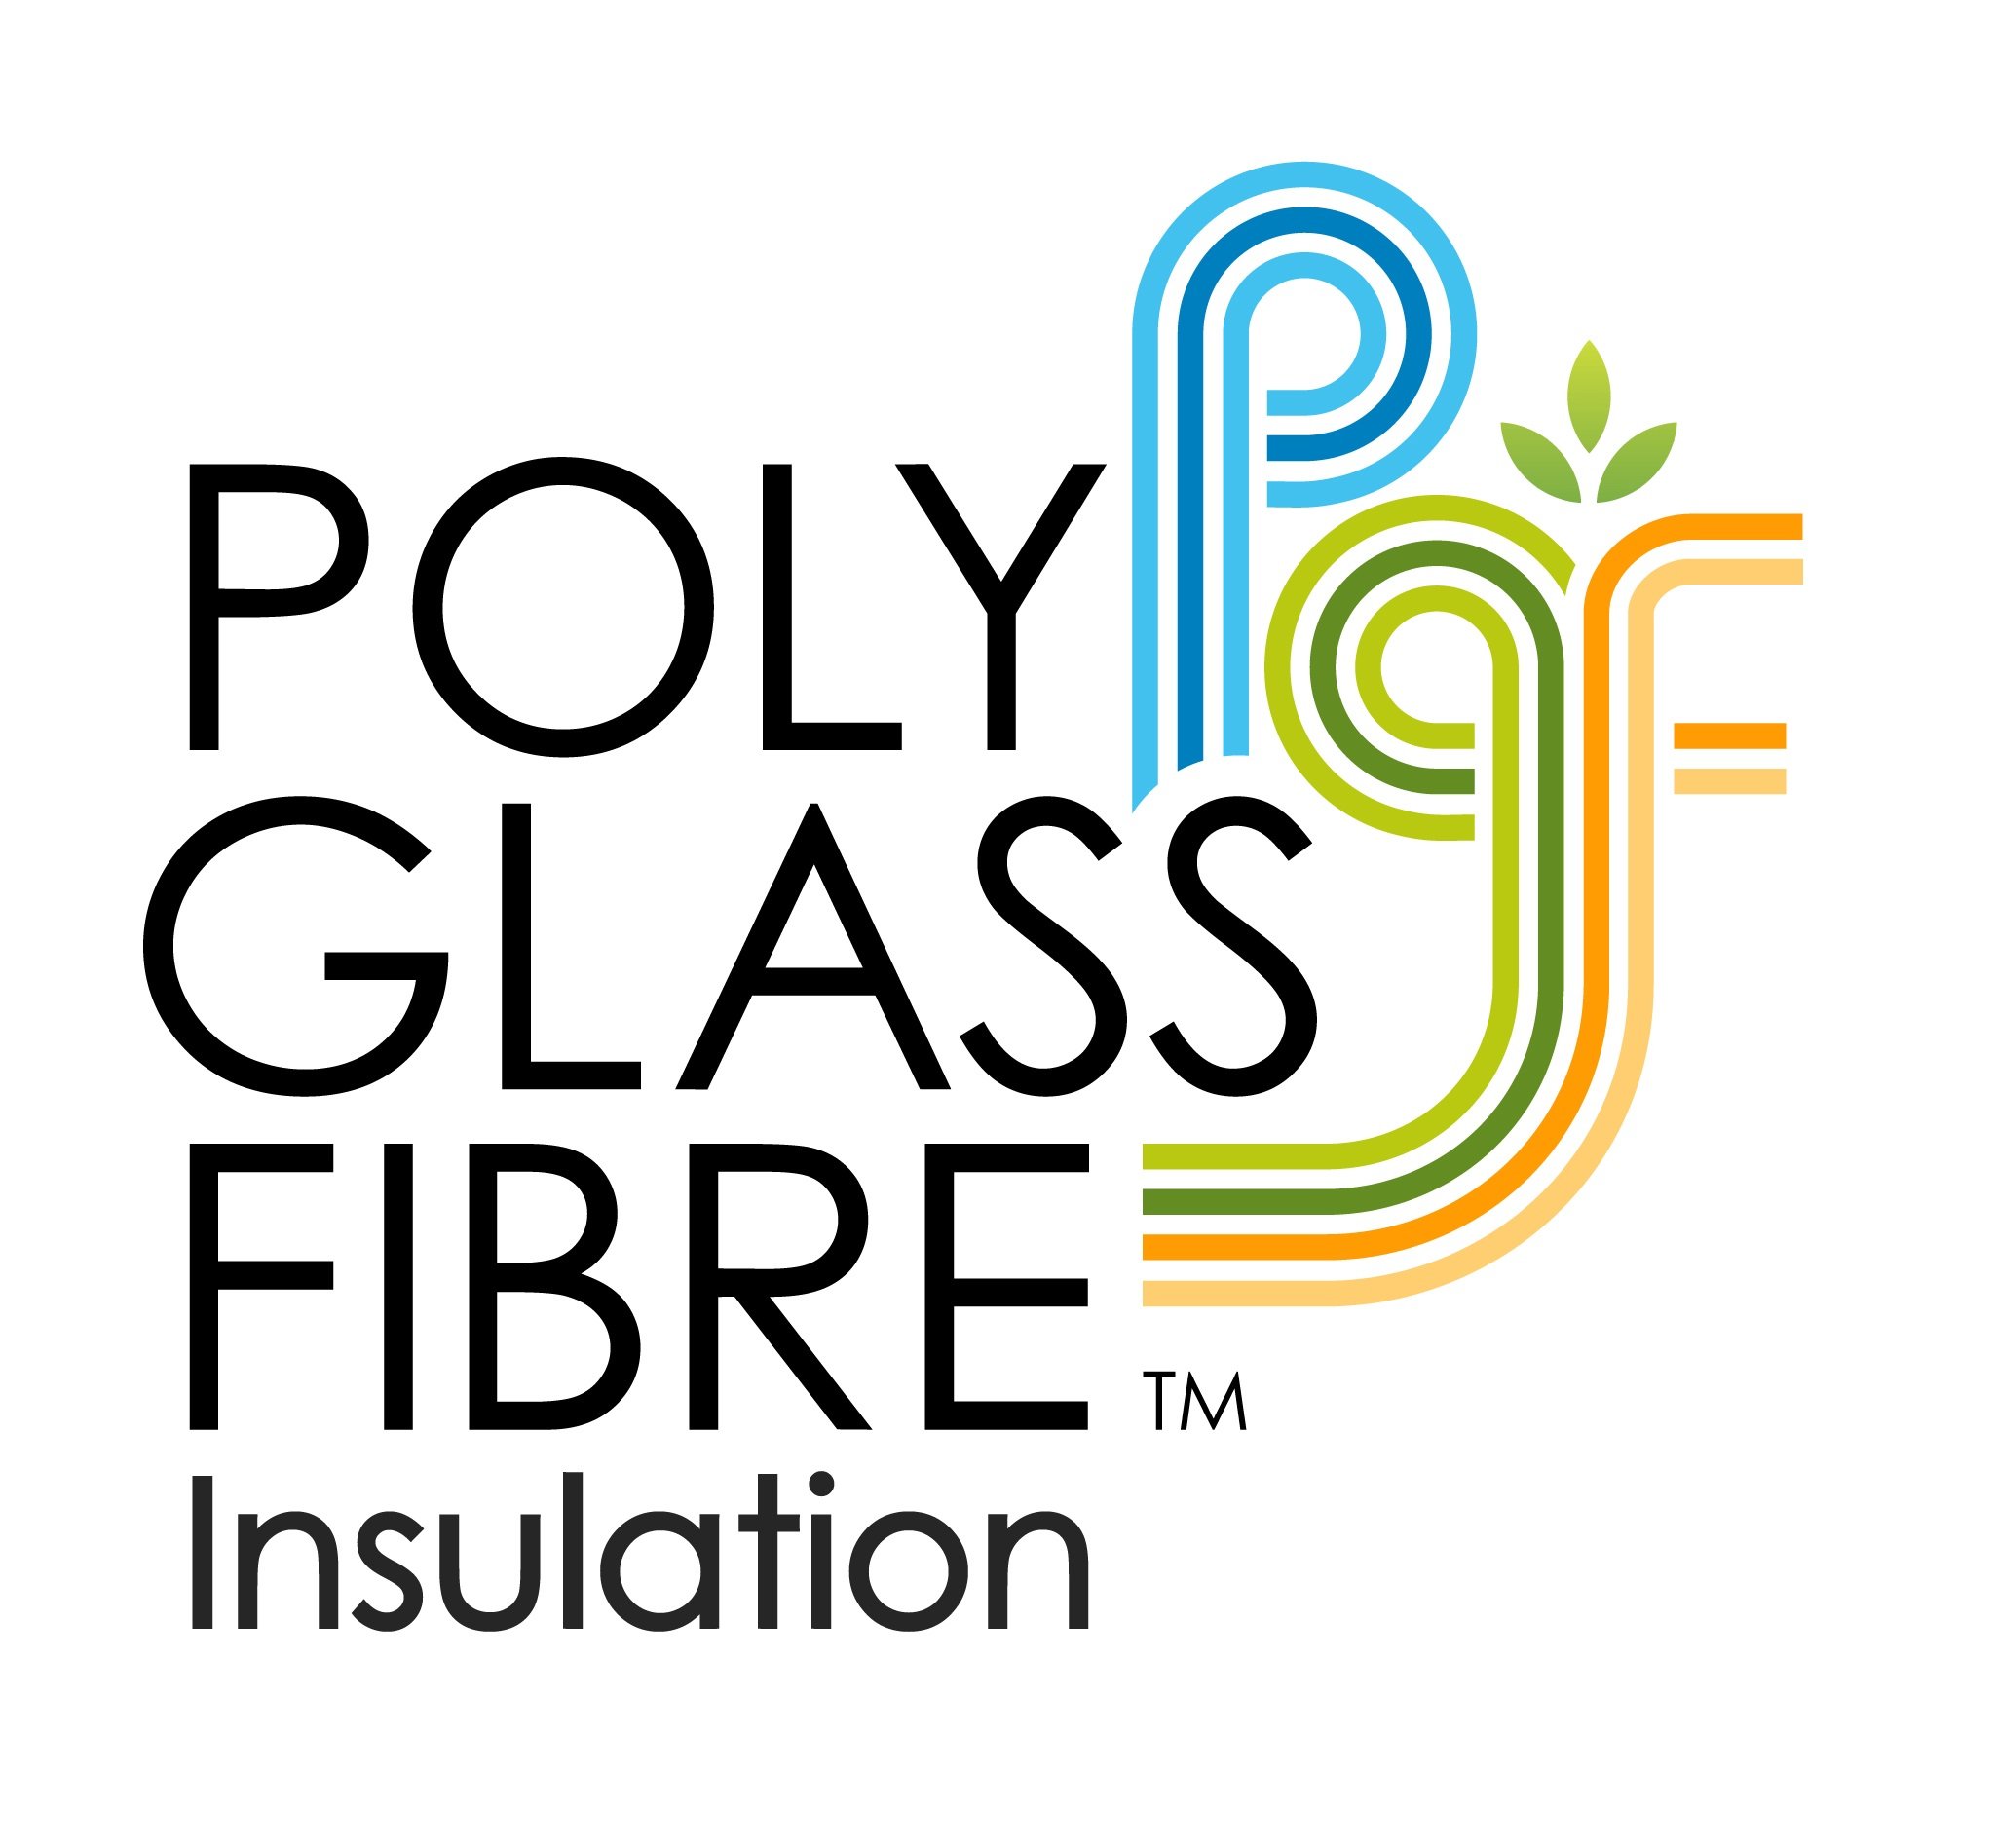 PGF logo with insulation.jpg